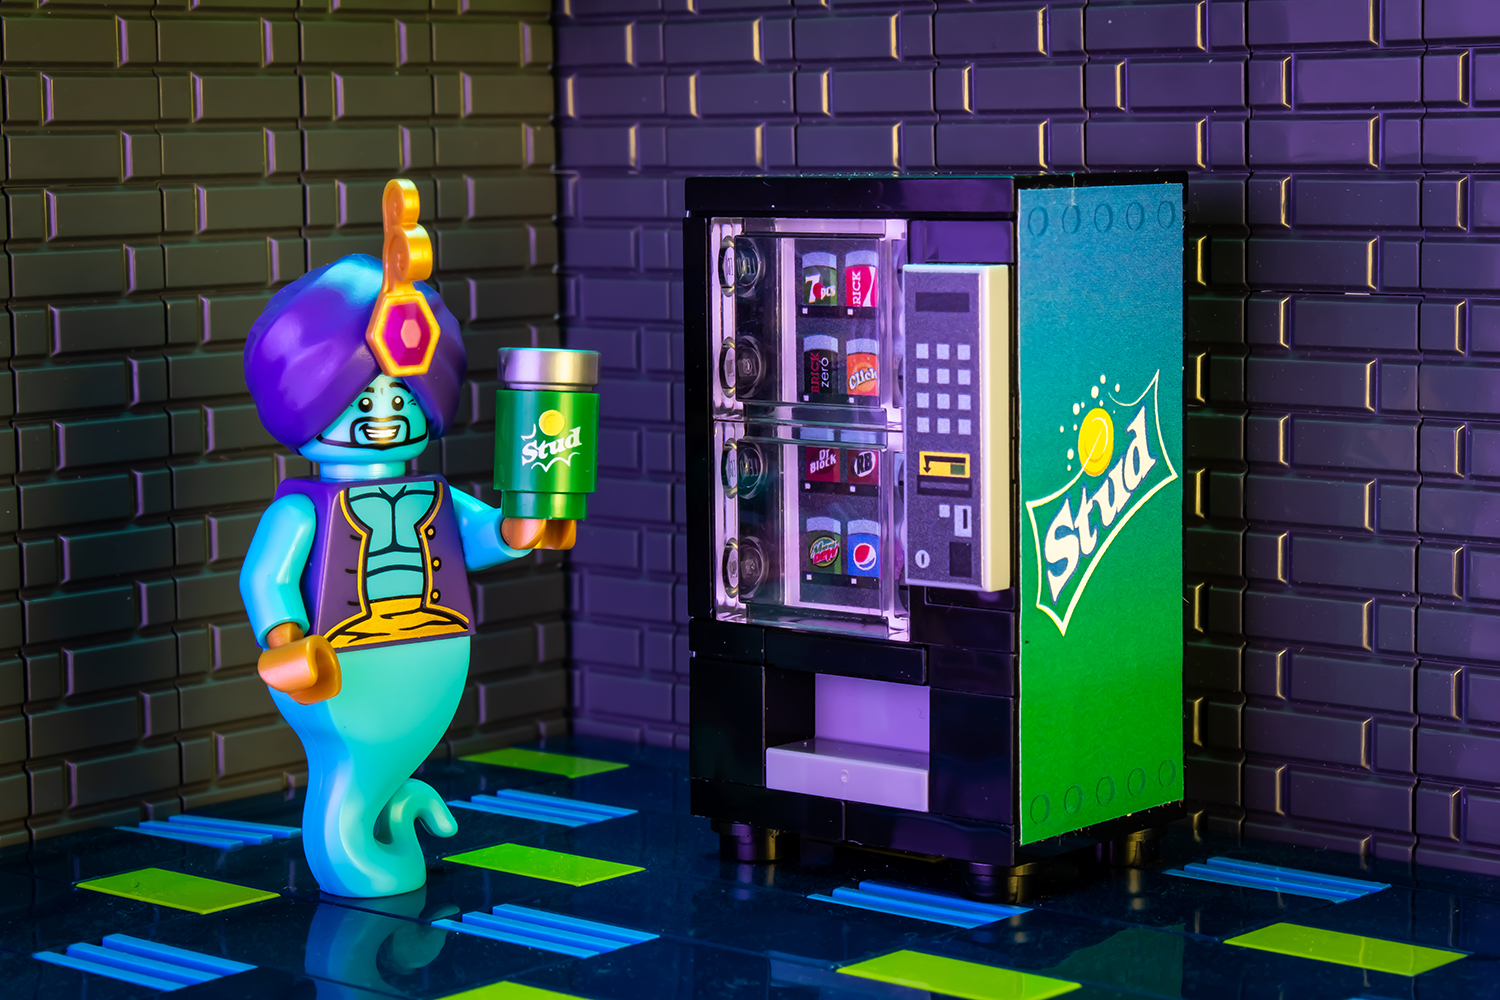 Stud - B3 Customs Soda Vending Machine made using LEGO parts